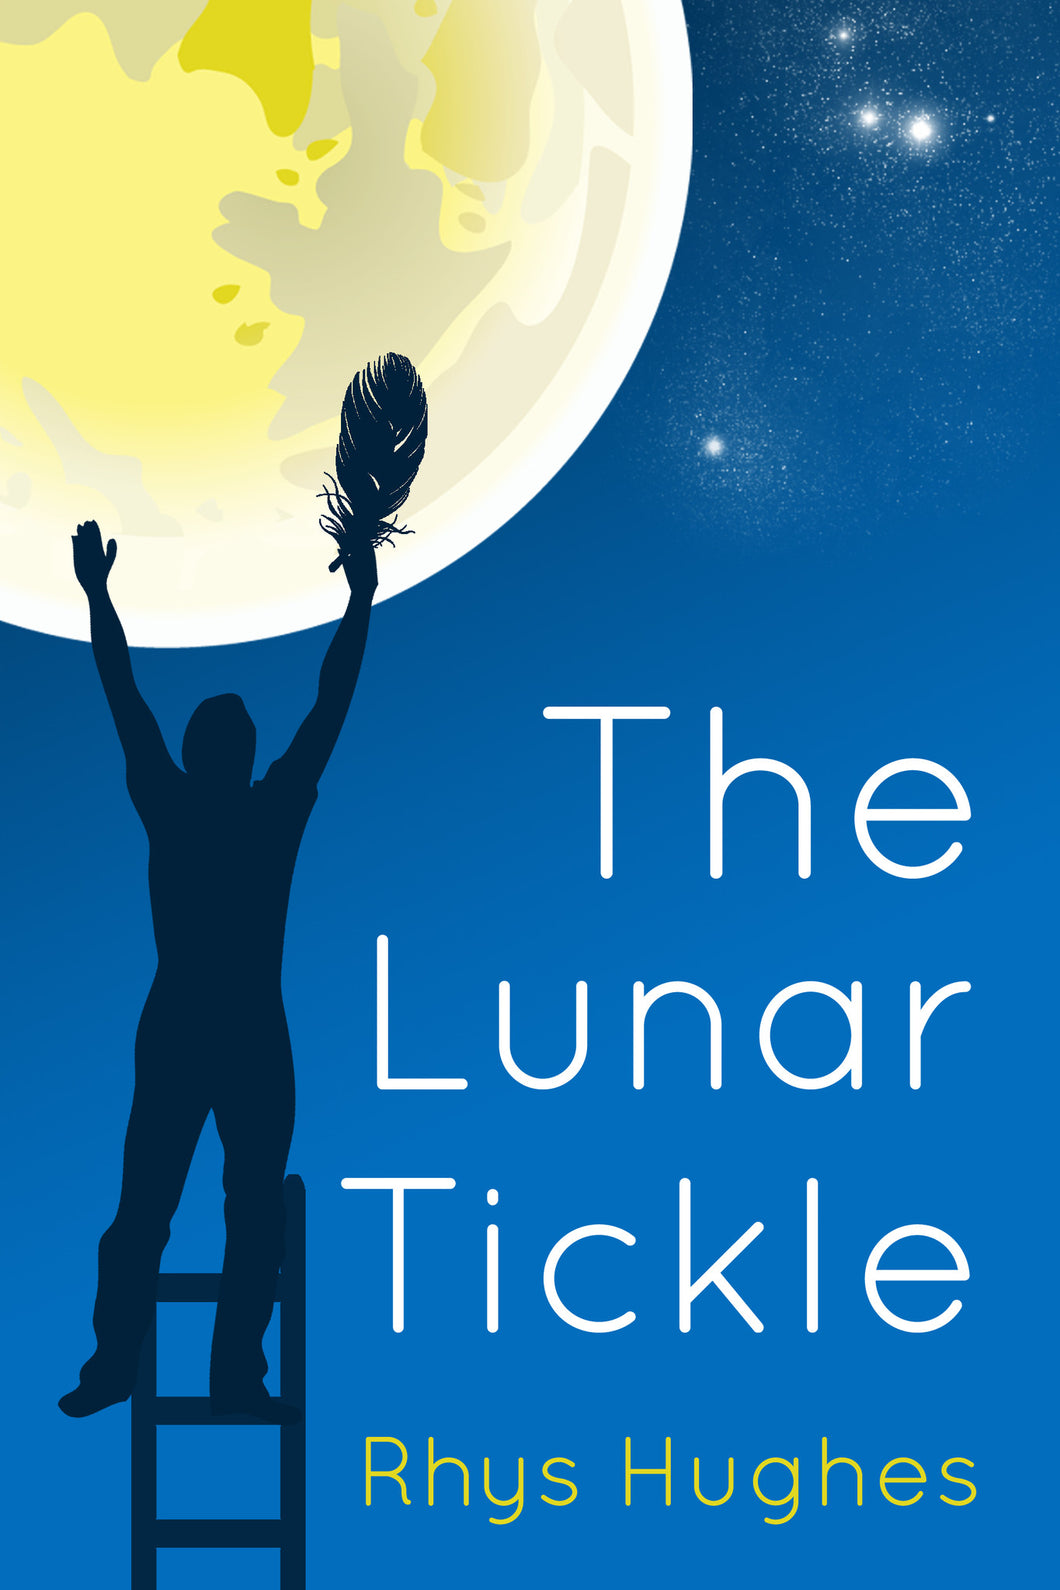 The Lunar Tickle